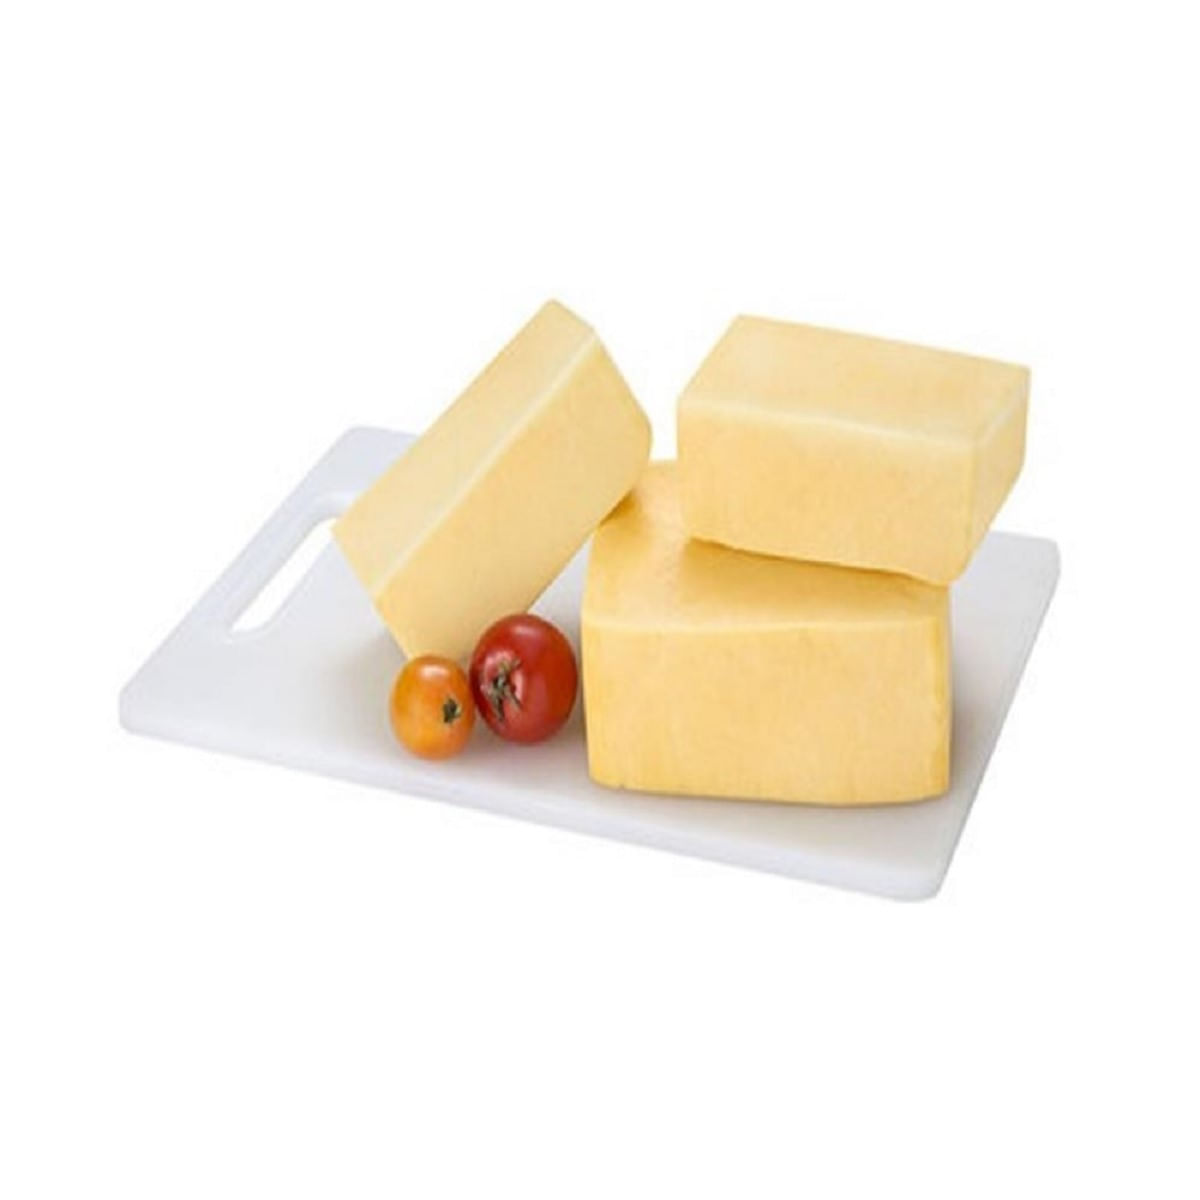 queijo-mussarela-pedaco-tche-milk-kg-1.jpg